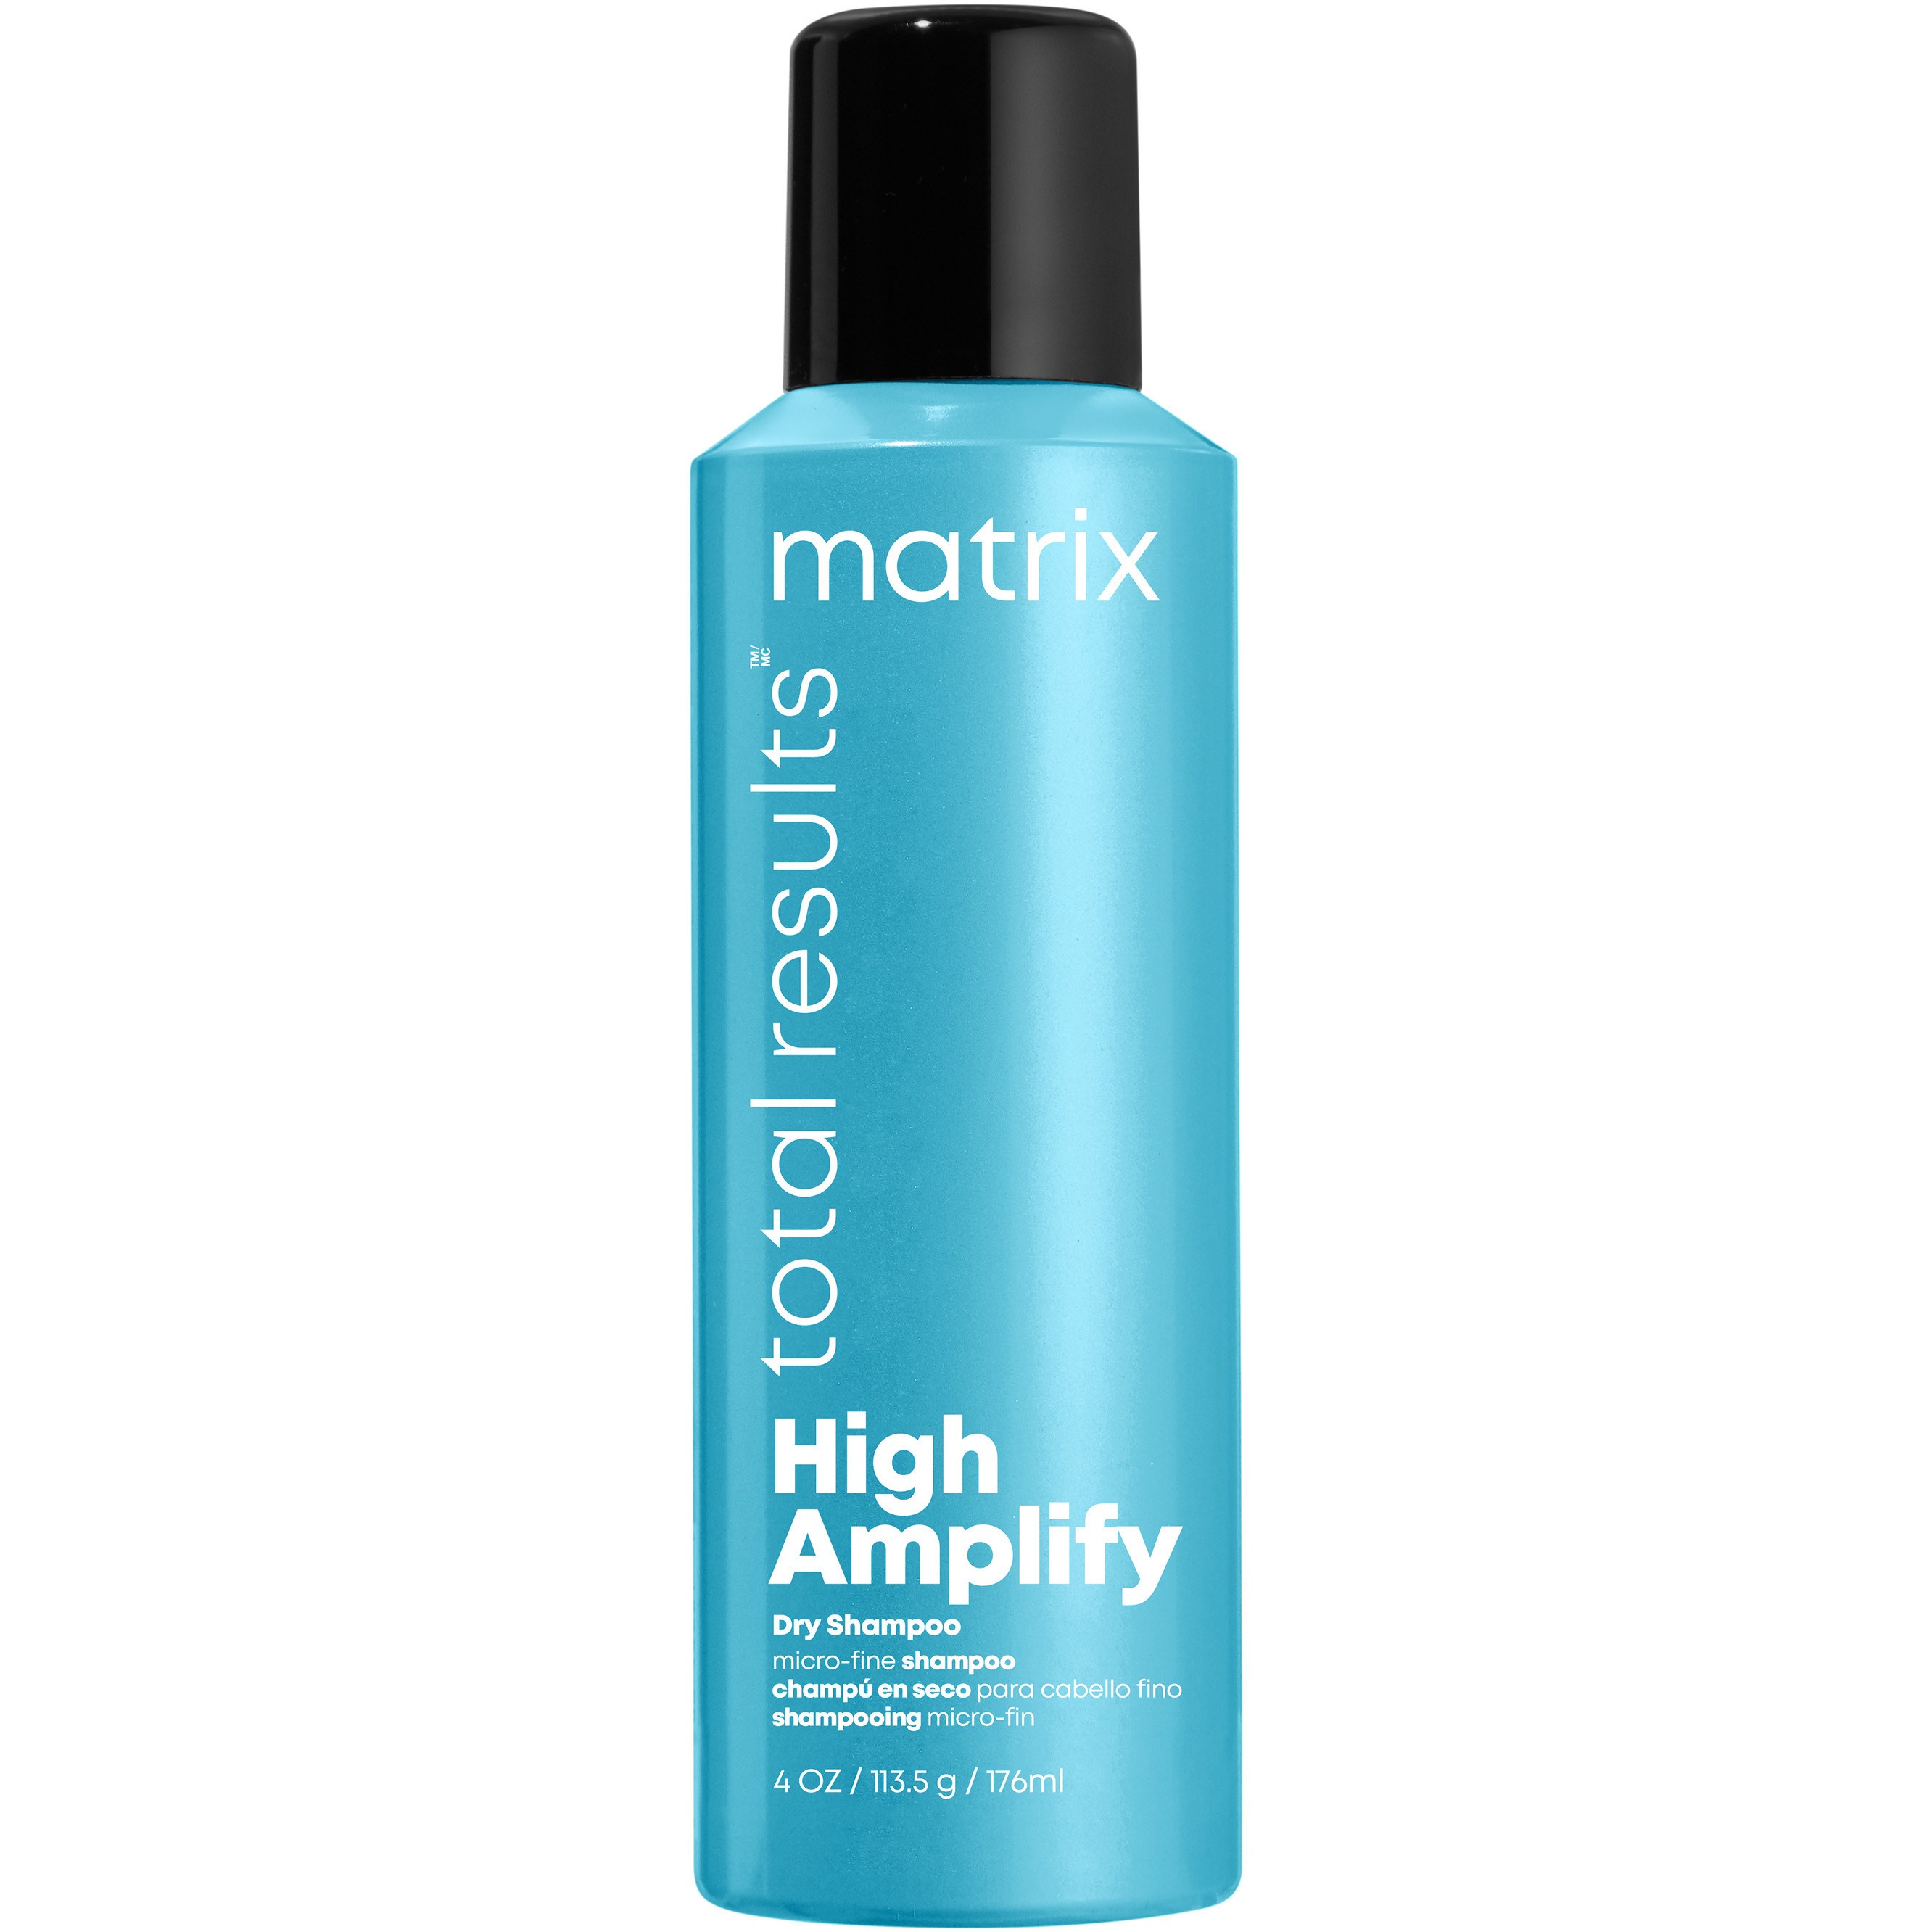 Фото - Шампунь Matrix High Amplify Total Results Dry Shampoo 176 ml 